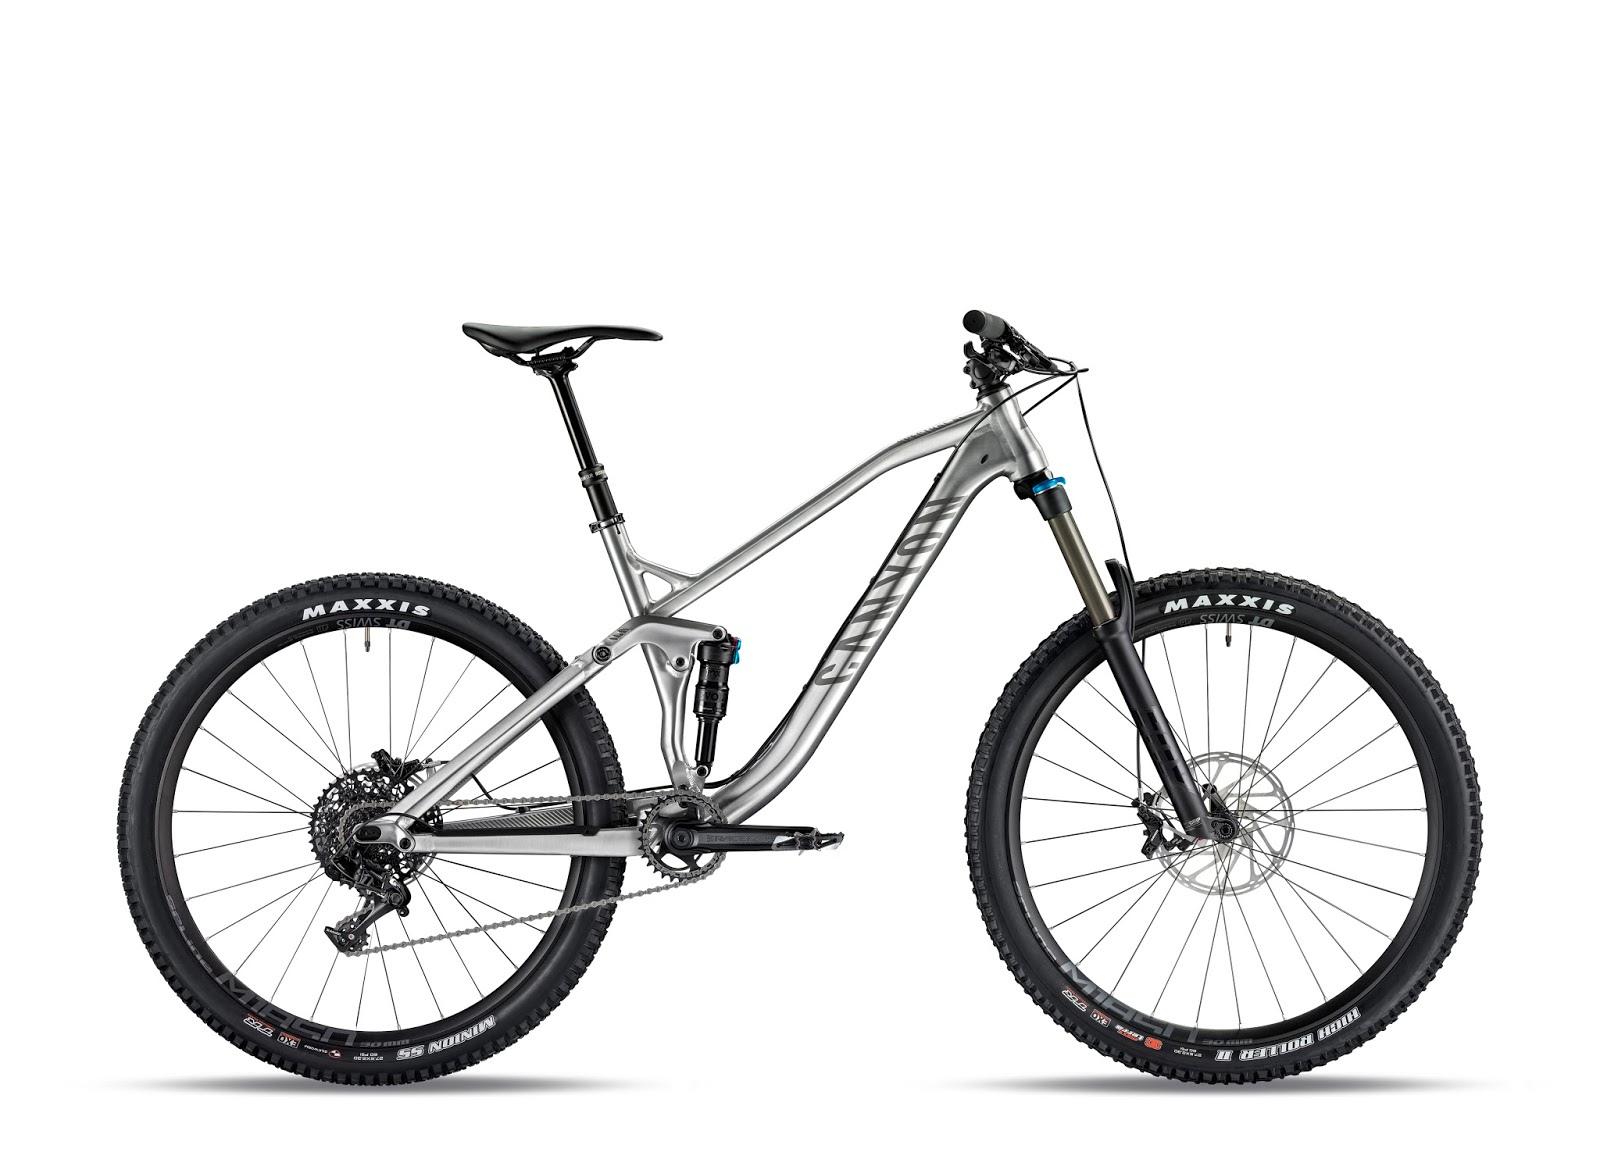 Spotlight Product: Canyon Spectral AL 5.0 EX | BikeToday.news